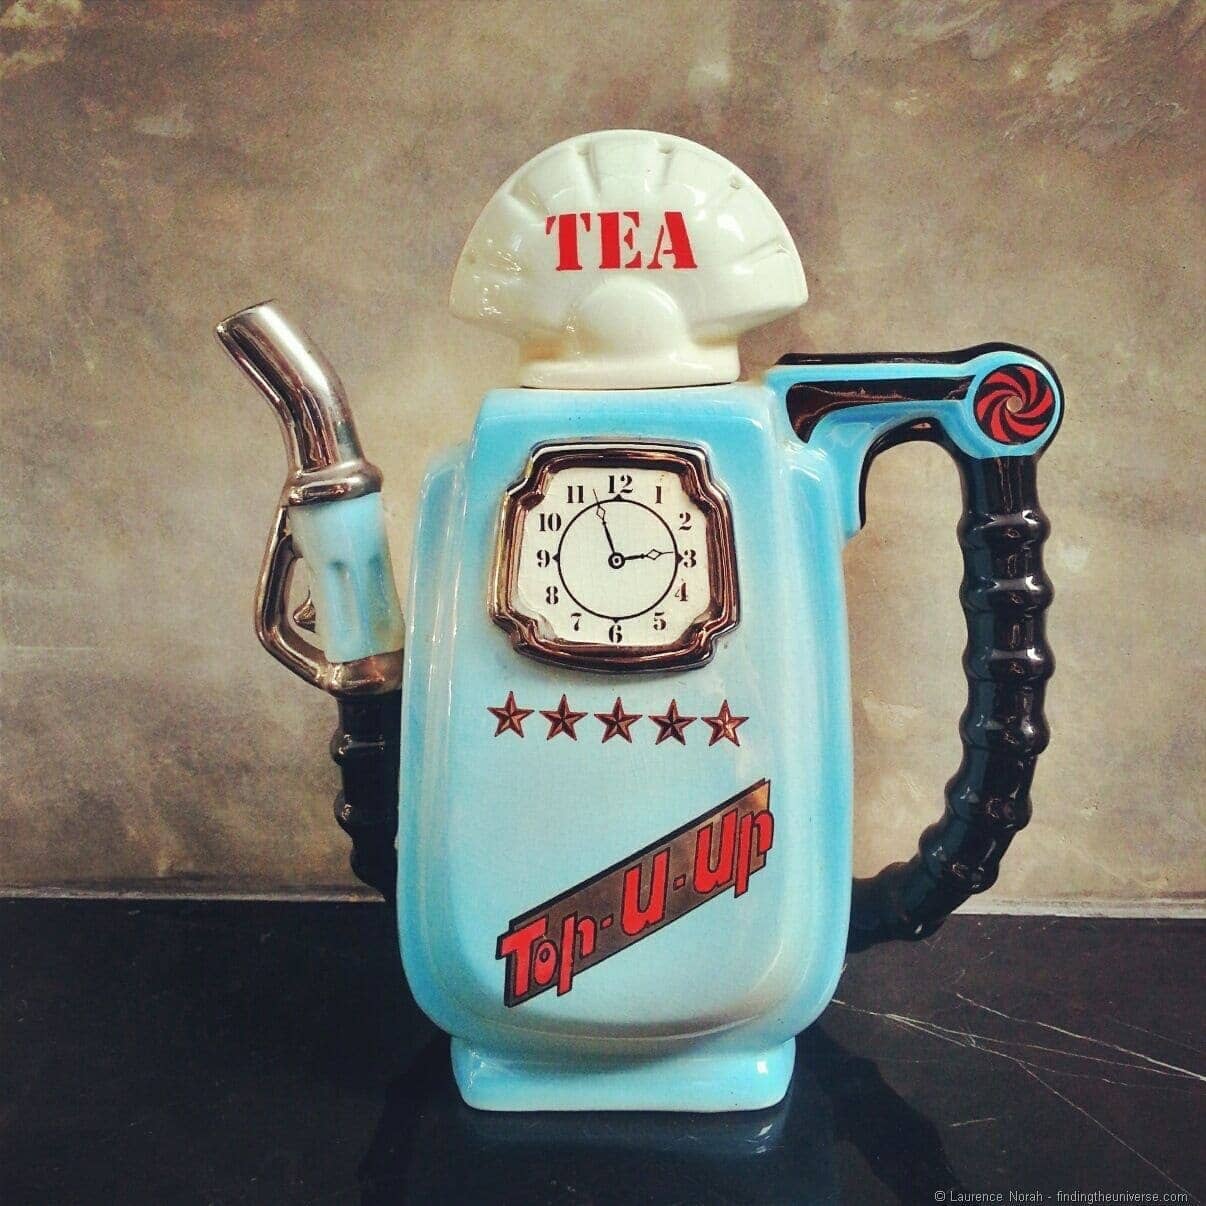 Tea. Very important in Vera's life